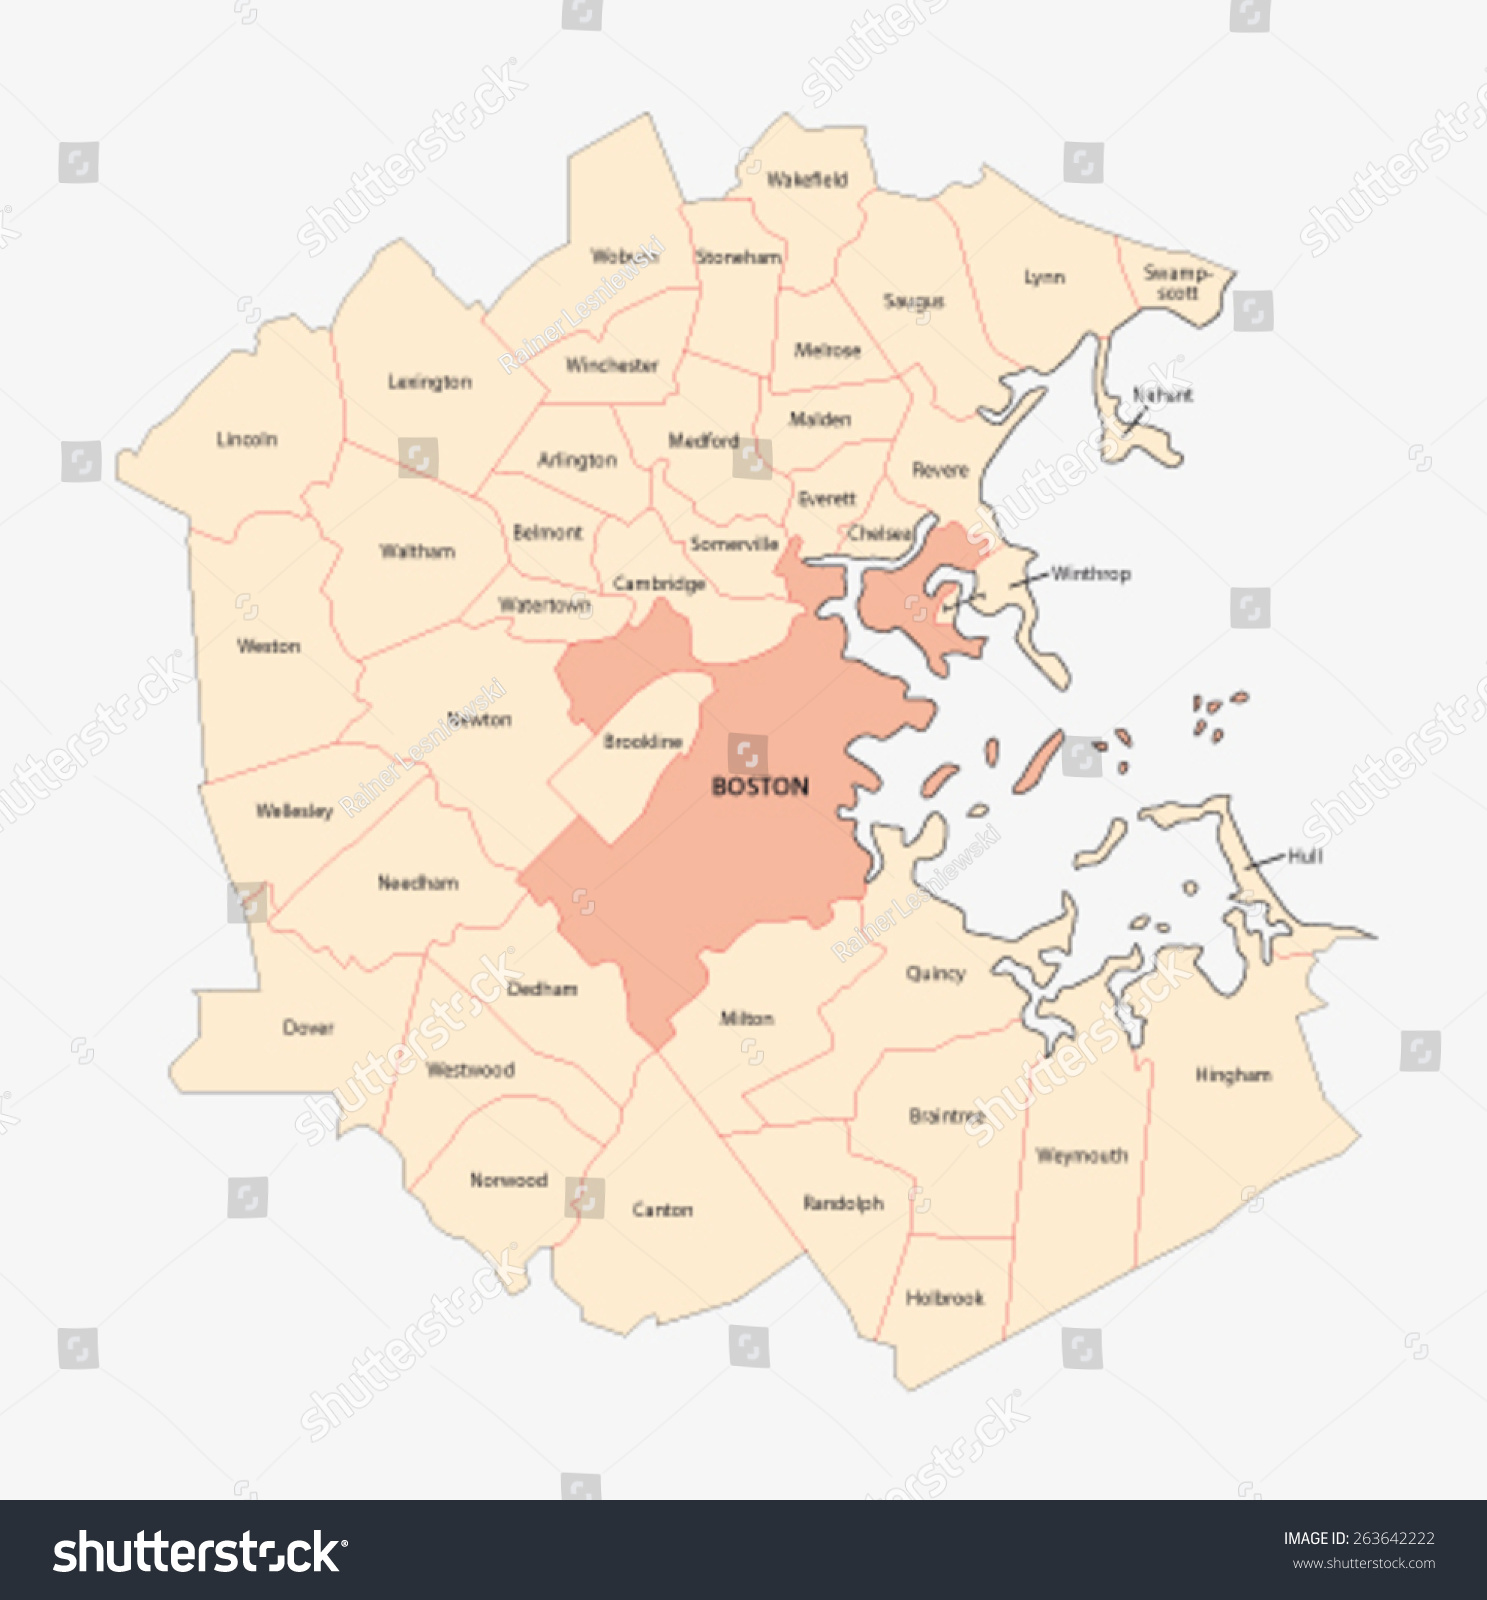 SVG of metro-boston area map svg